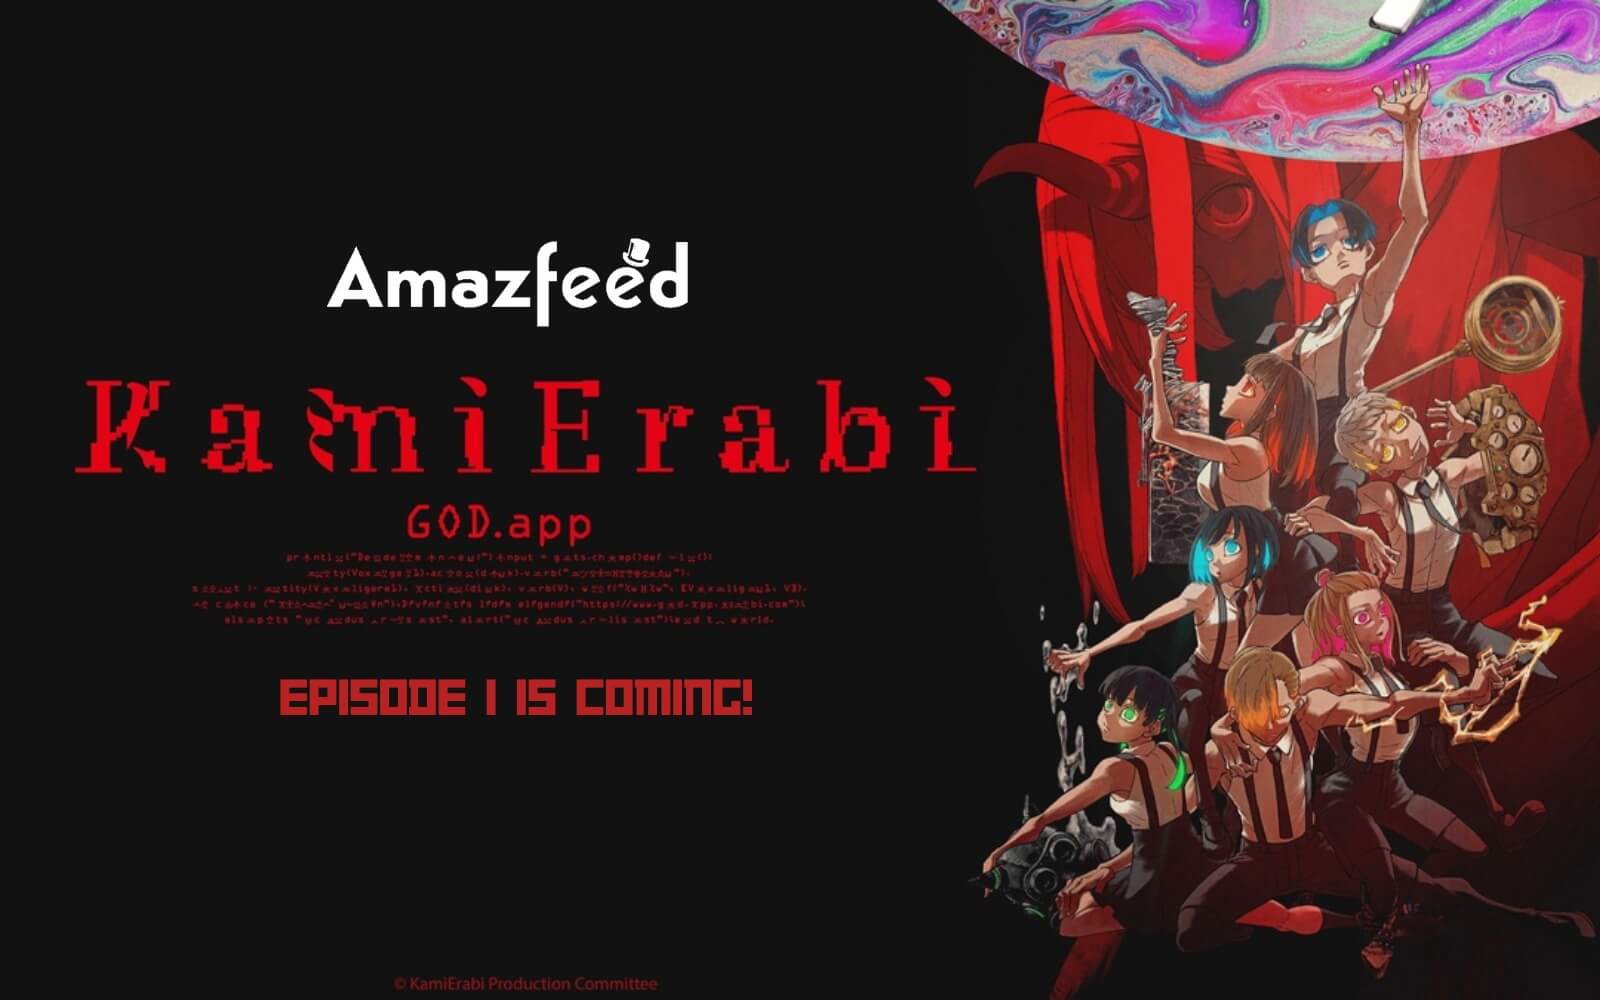 KamiErabi - God.app Episode 1